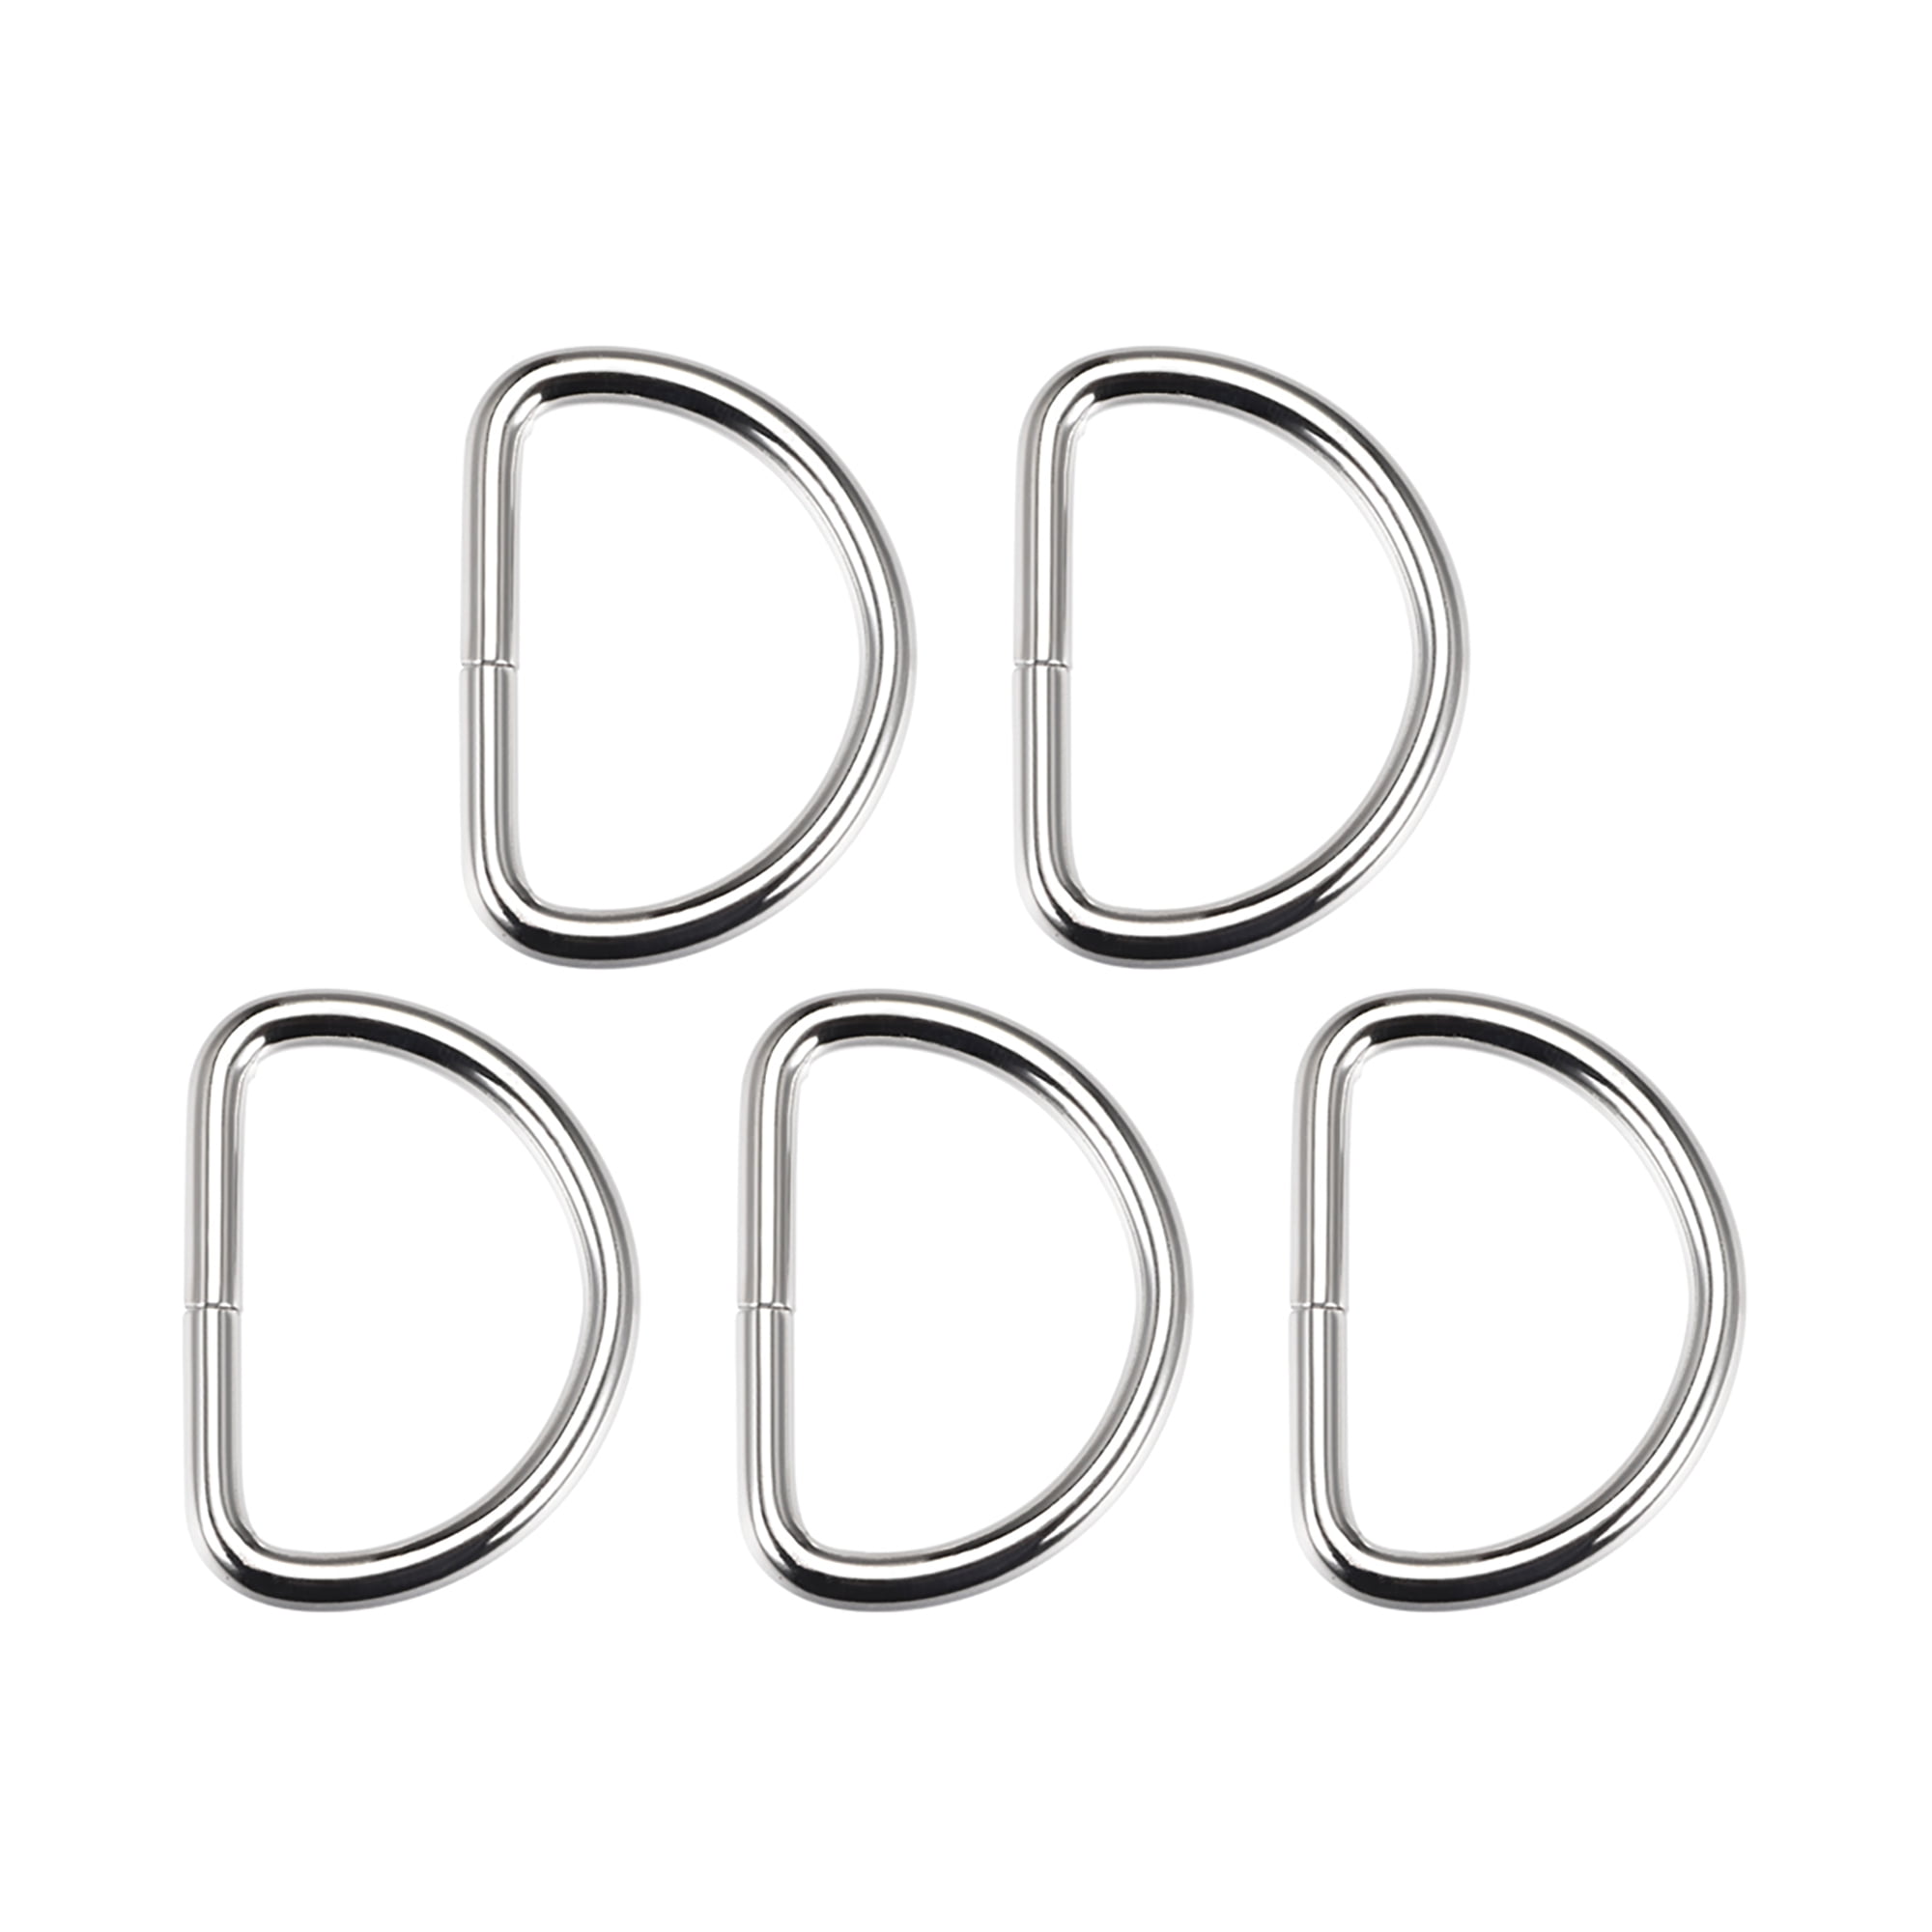 5 Pcs D Ring Buckle 1.6 Inch Metal Semi-Circular D-Ring Silver Tone for ...